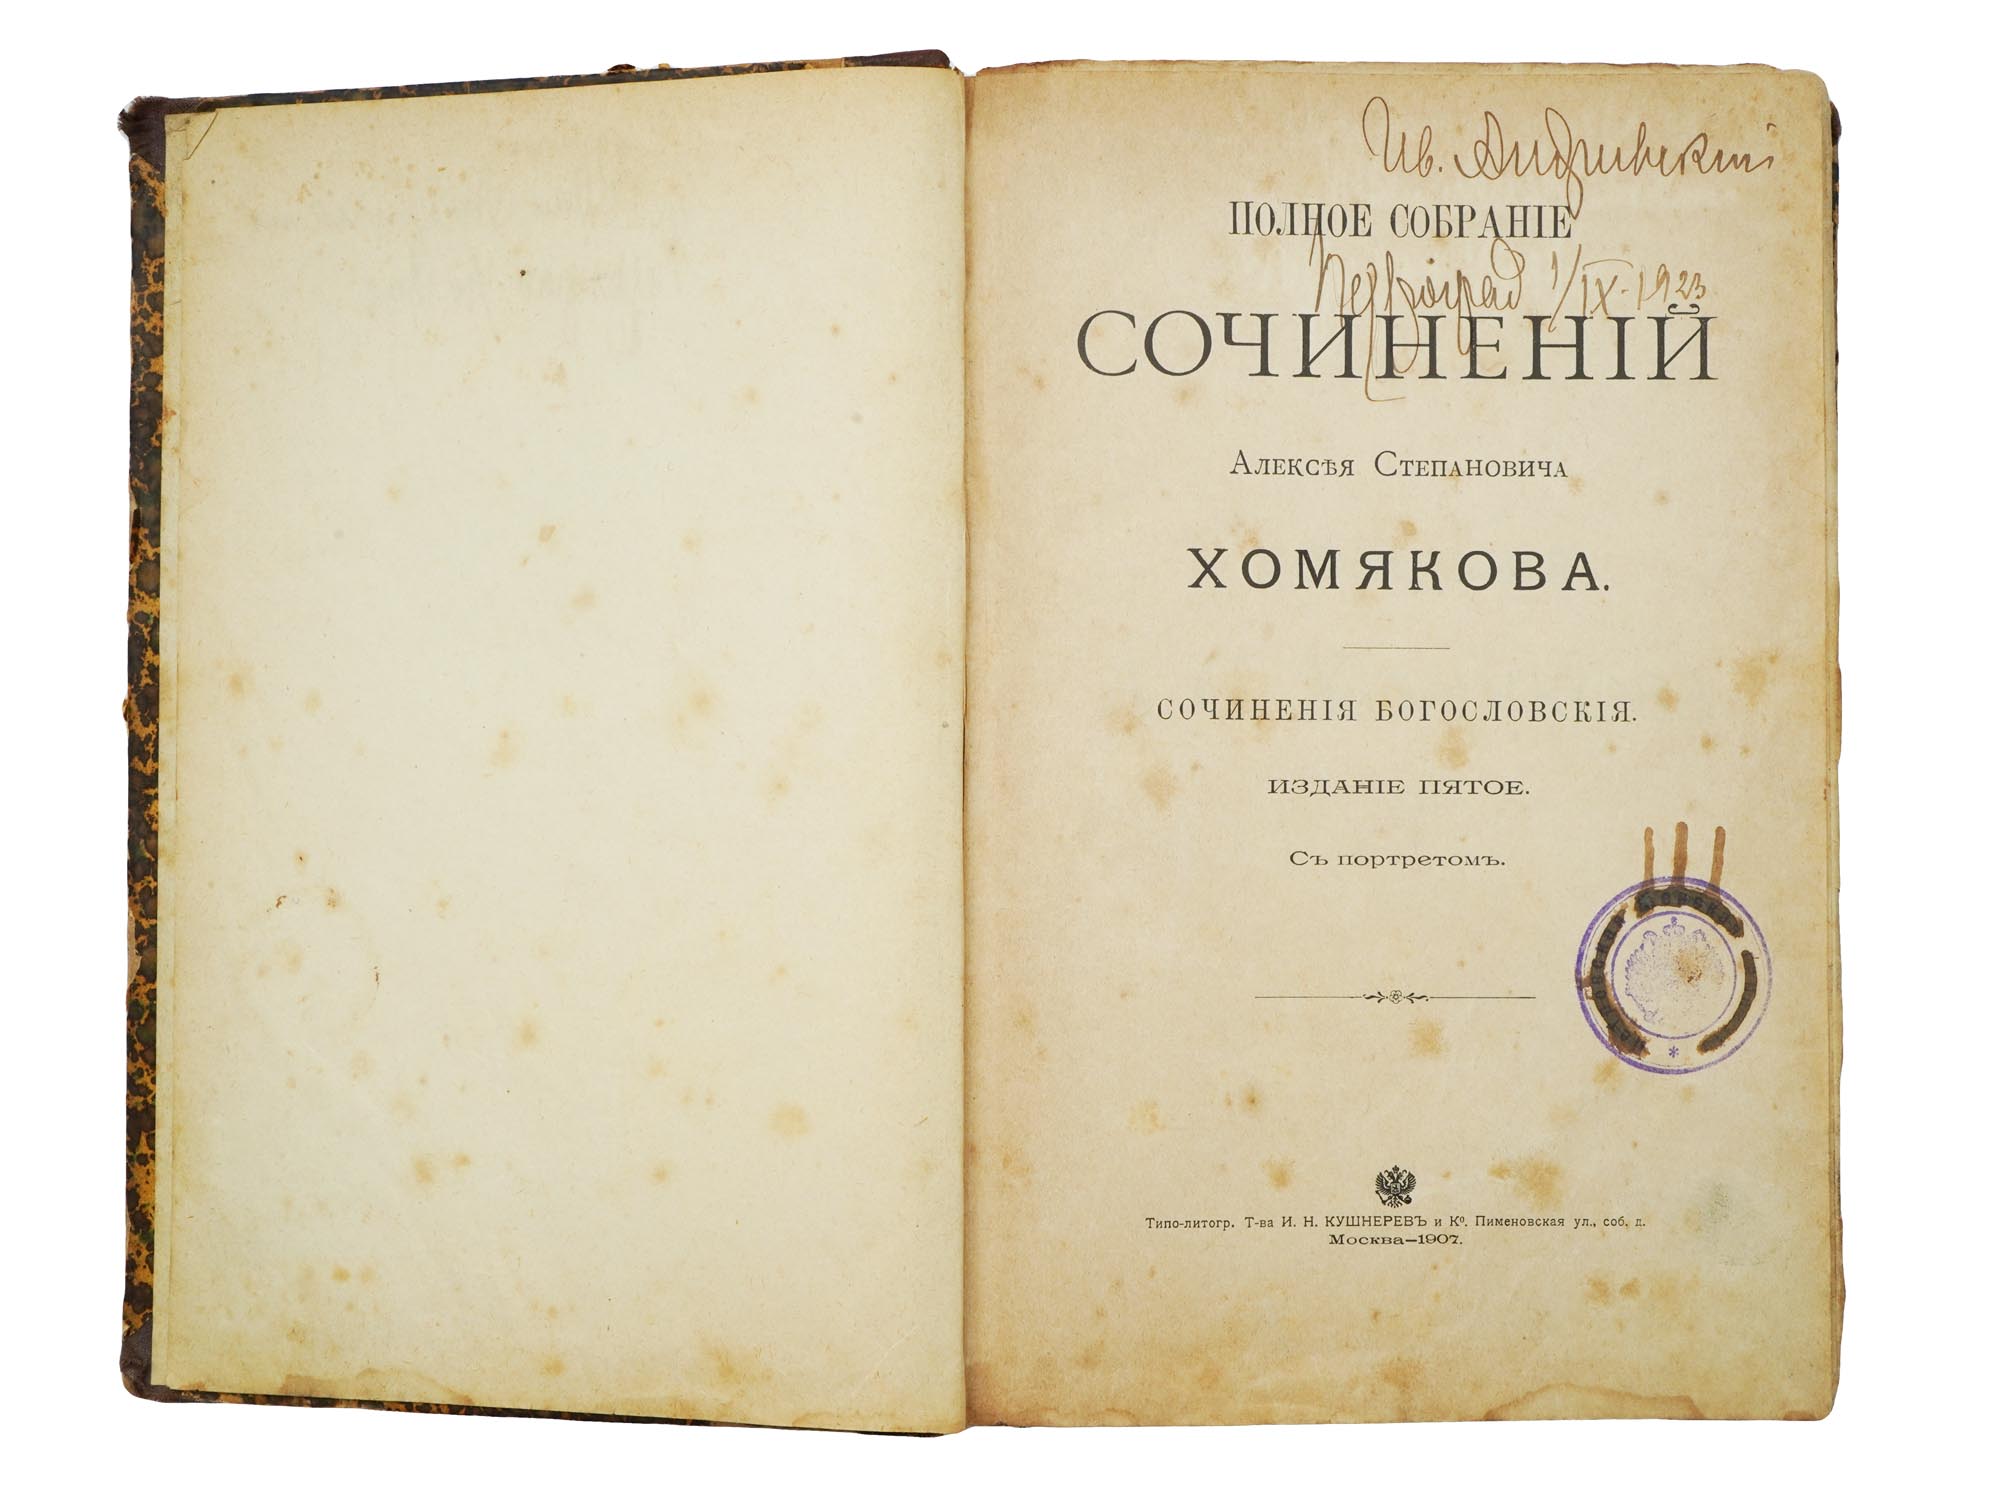 ANTIQUE RUSSIAN BOOKS YUSHKEVICH ALEXEI KHOMYAKOV PIC-7